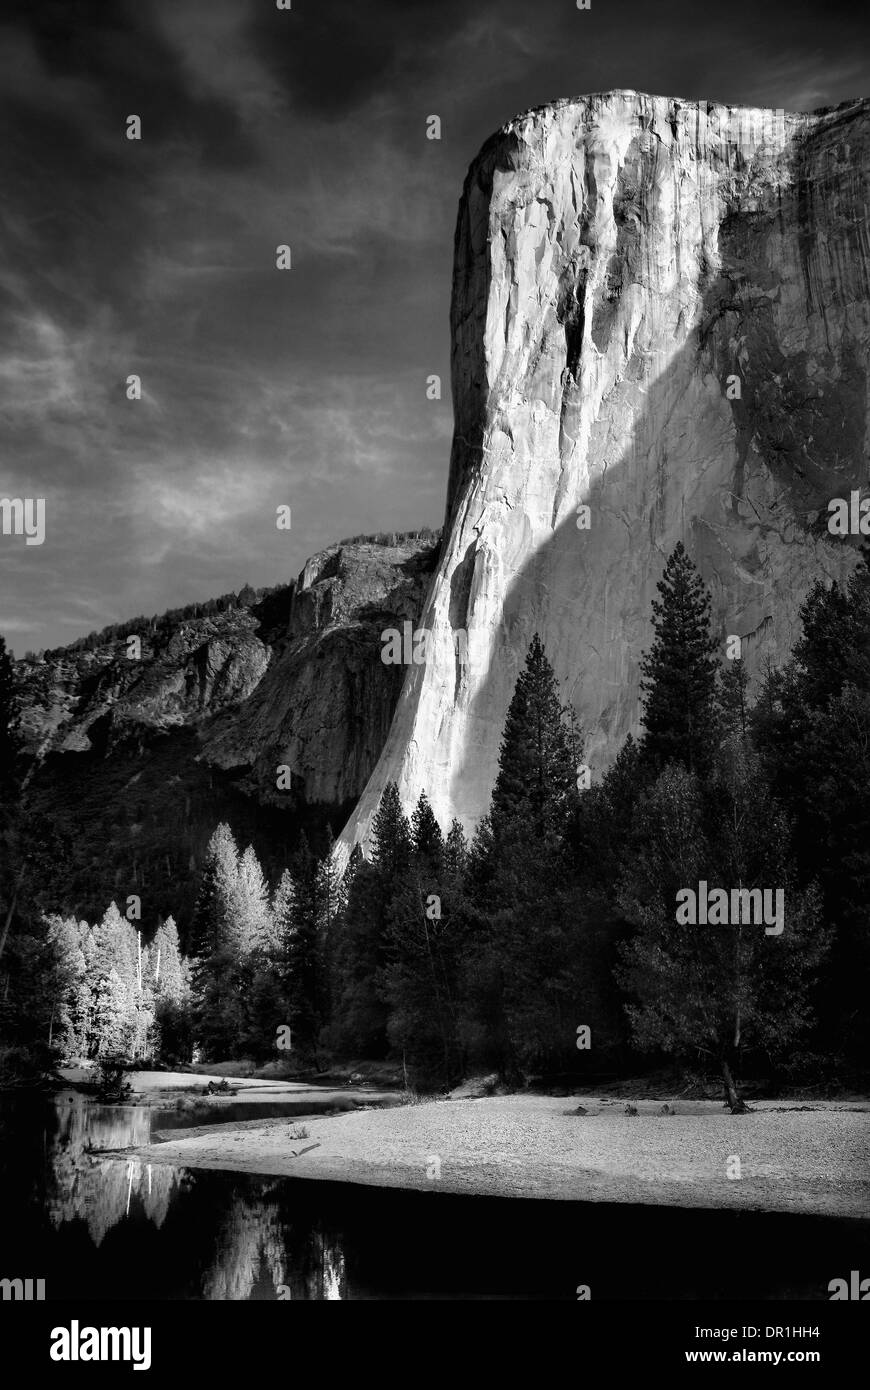 Sheer rock face, Yosemite, California, United States Stock Photo